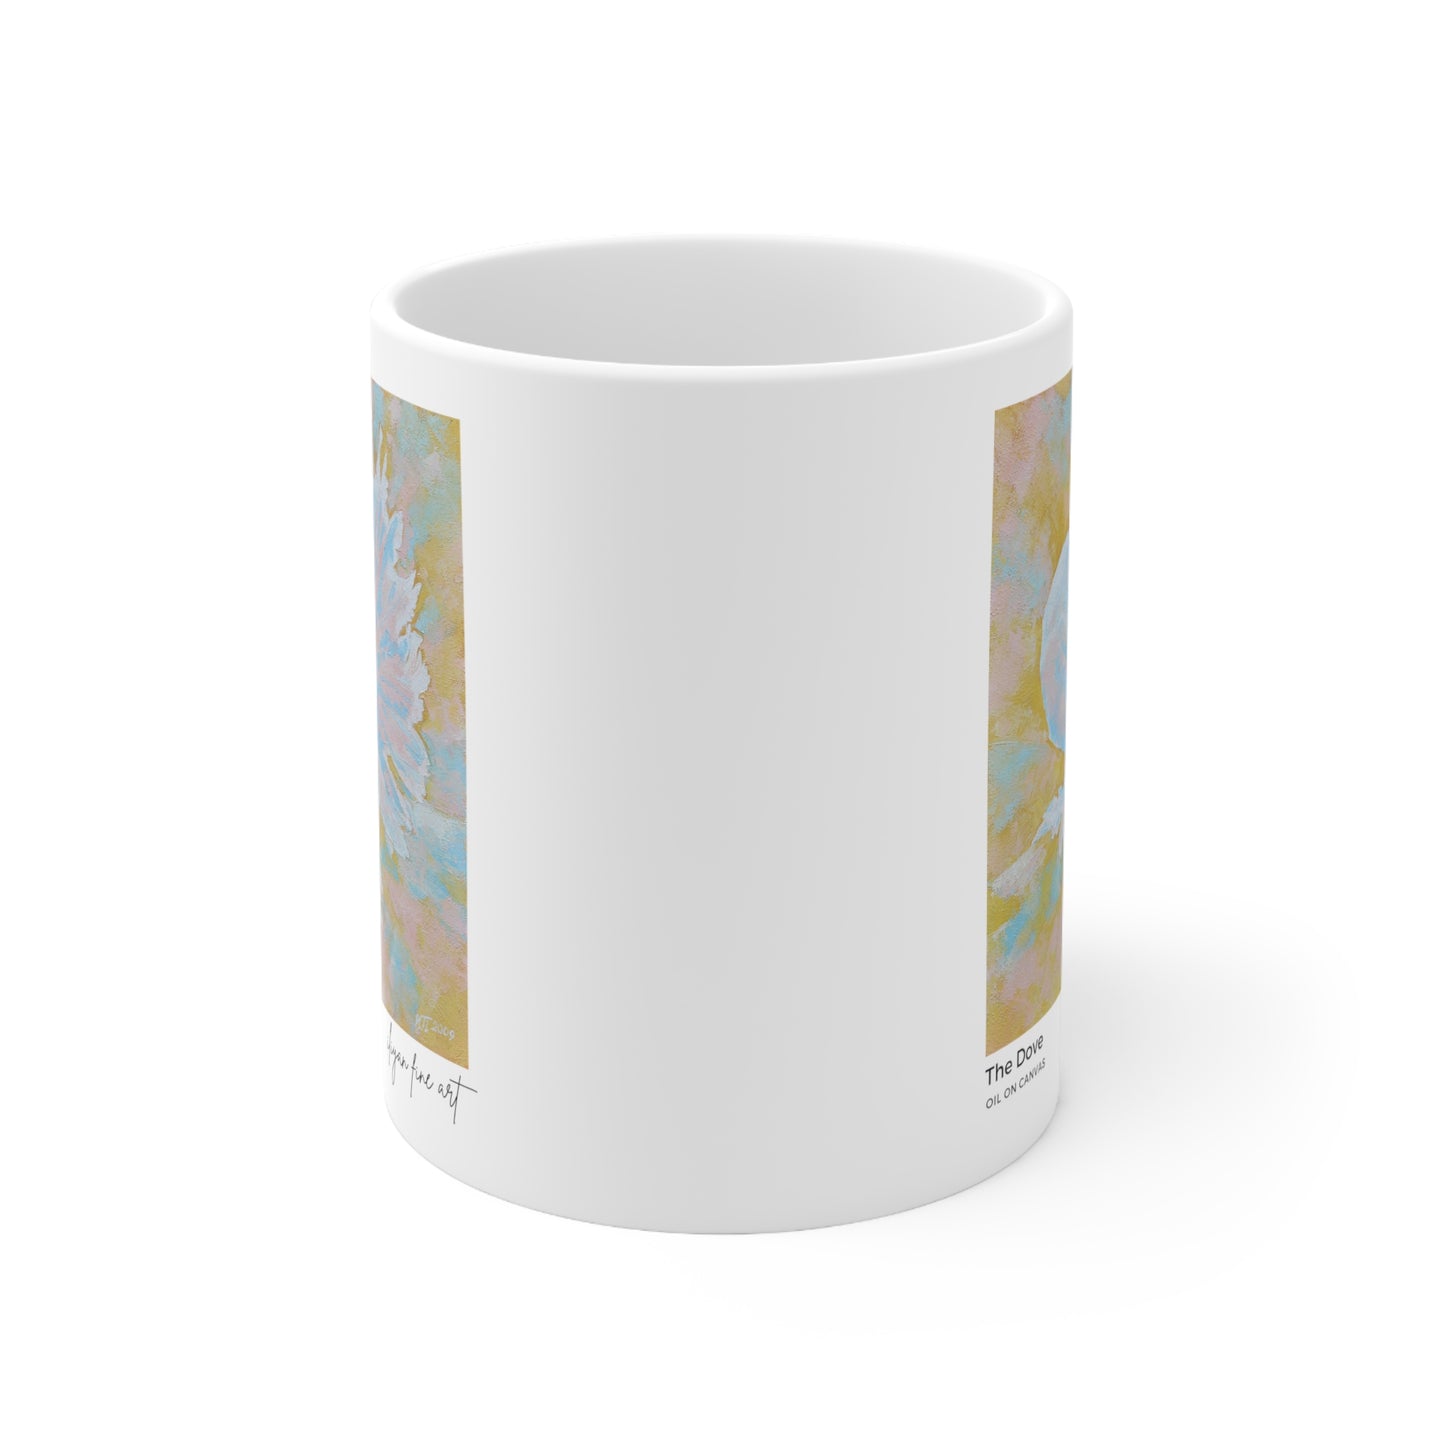 Ceramic Mug 11oz - The Dove